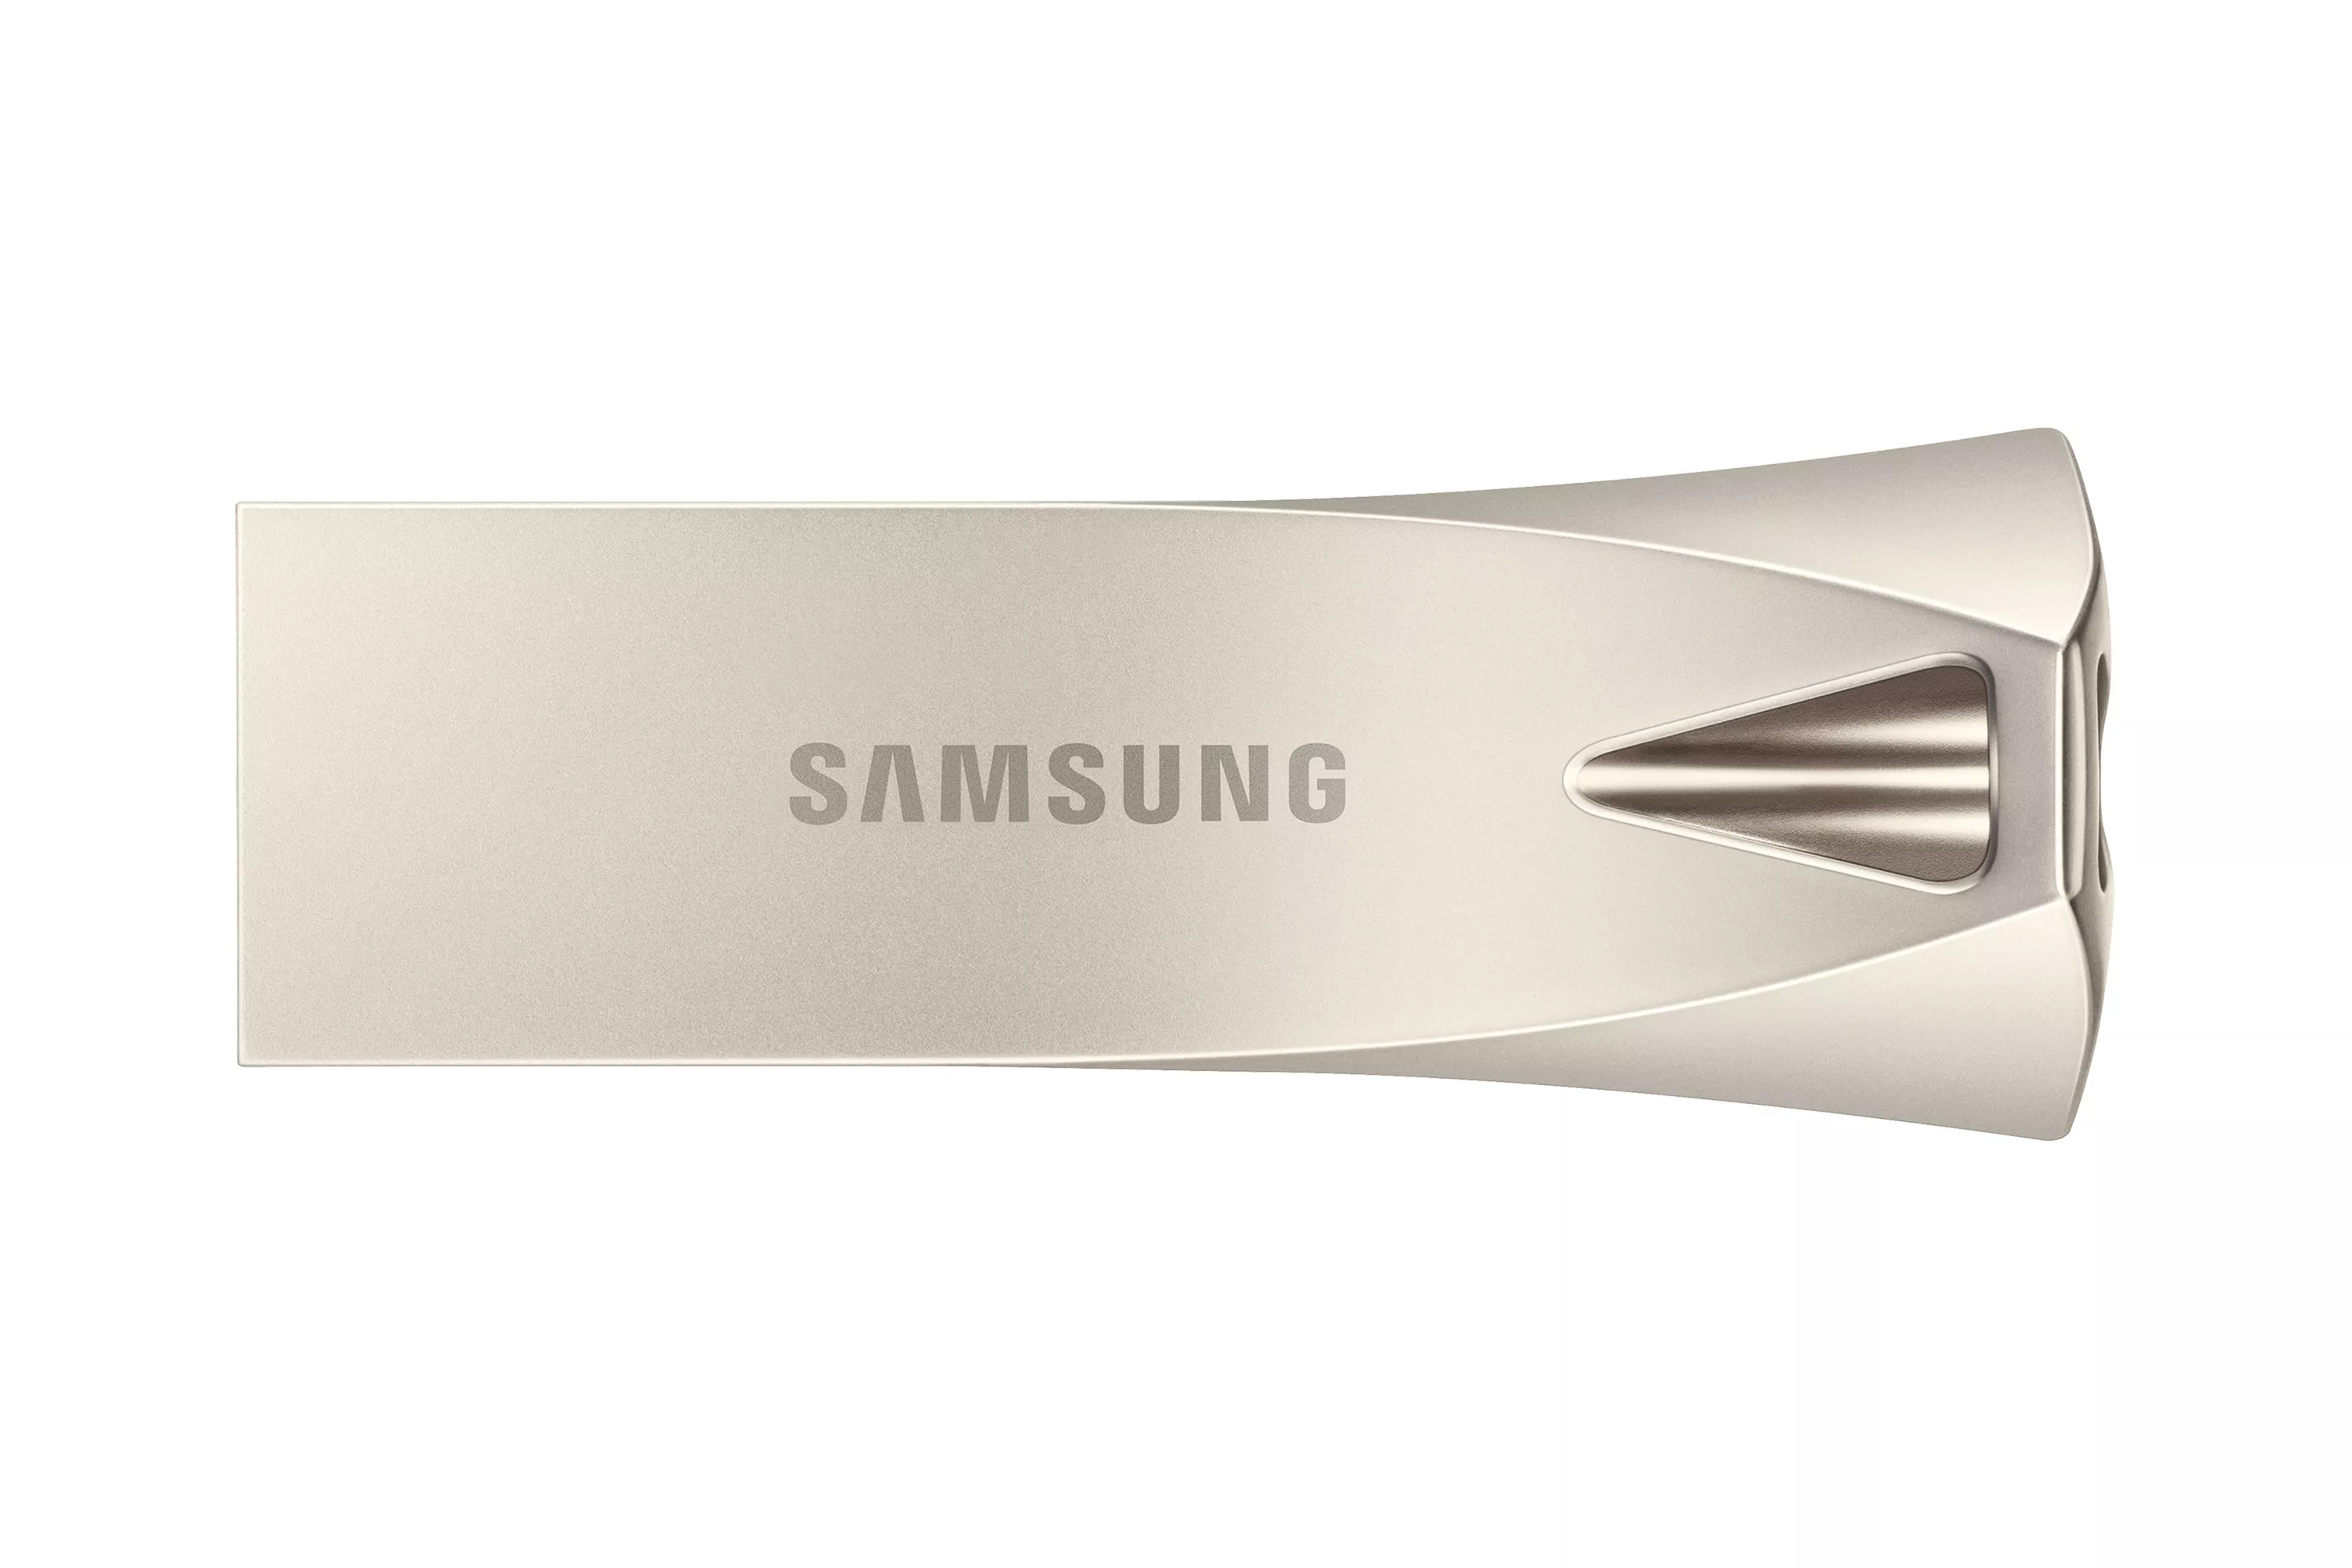 Achat SAMSUNG BAR PLUS 64Go USB 3.1 Champagne Silver au meilleur prix